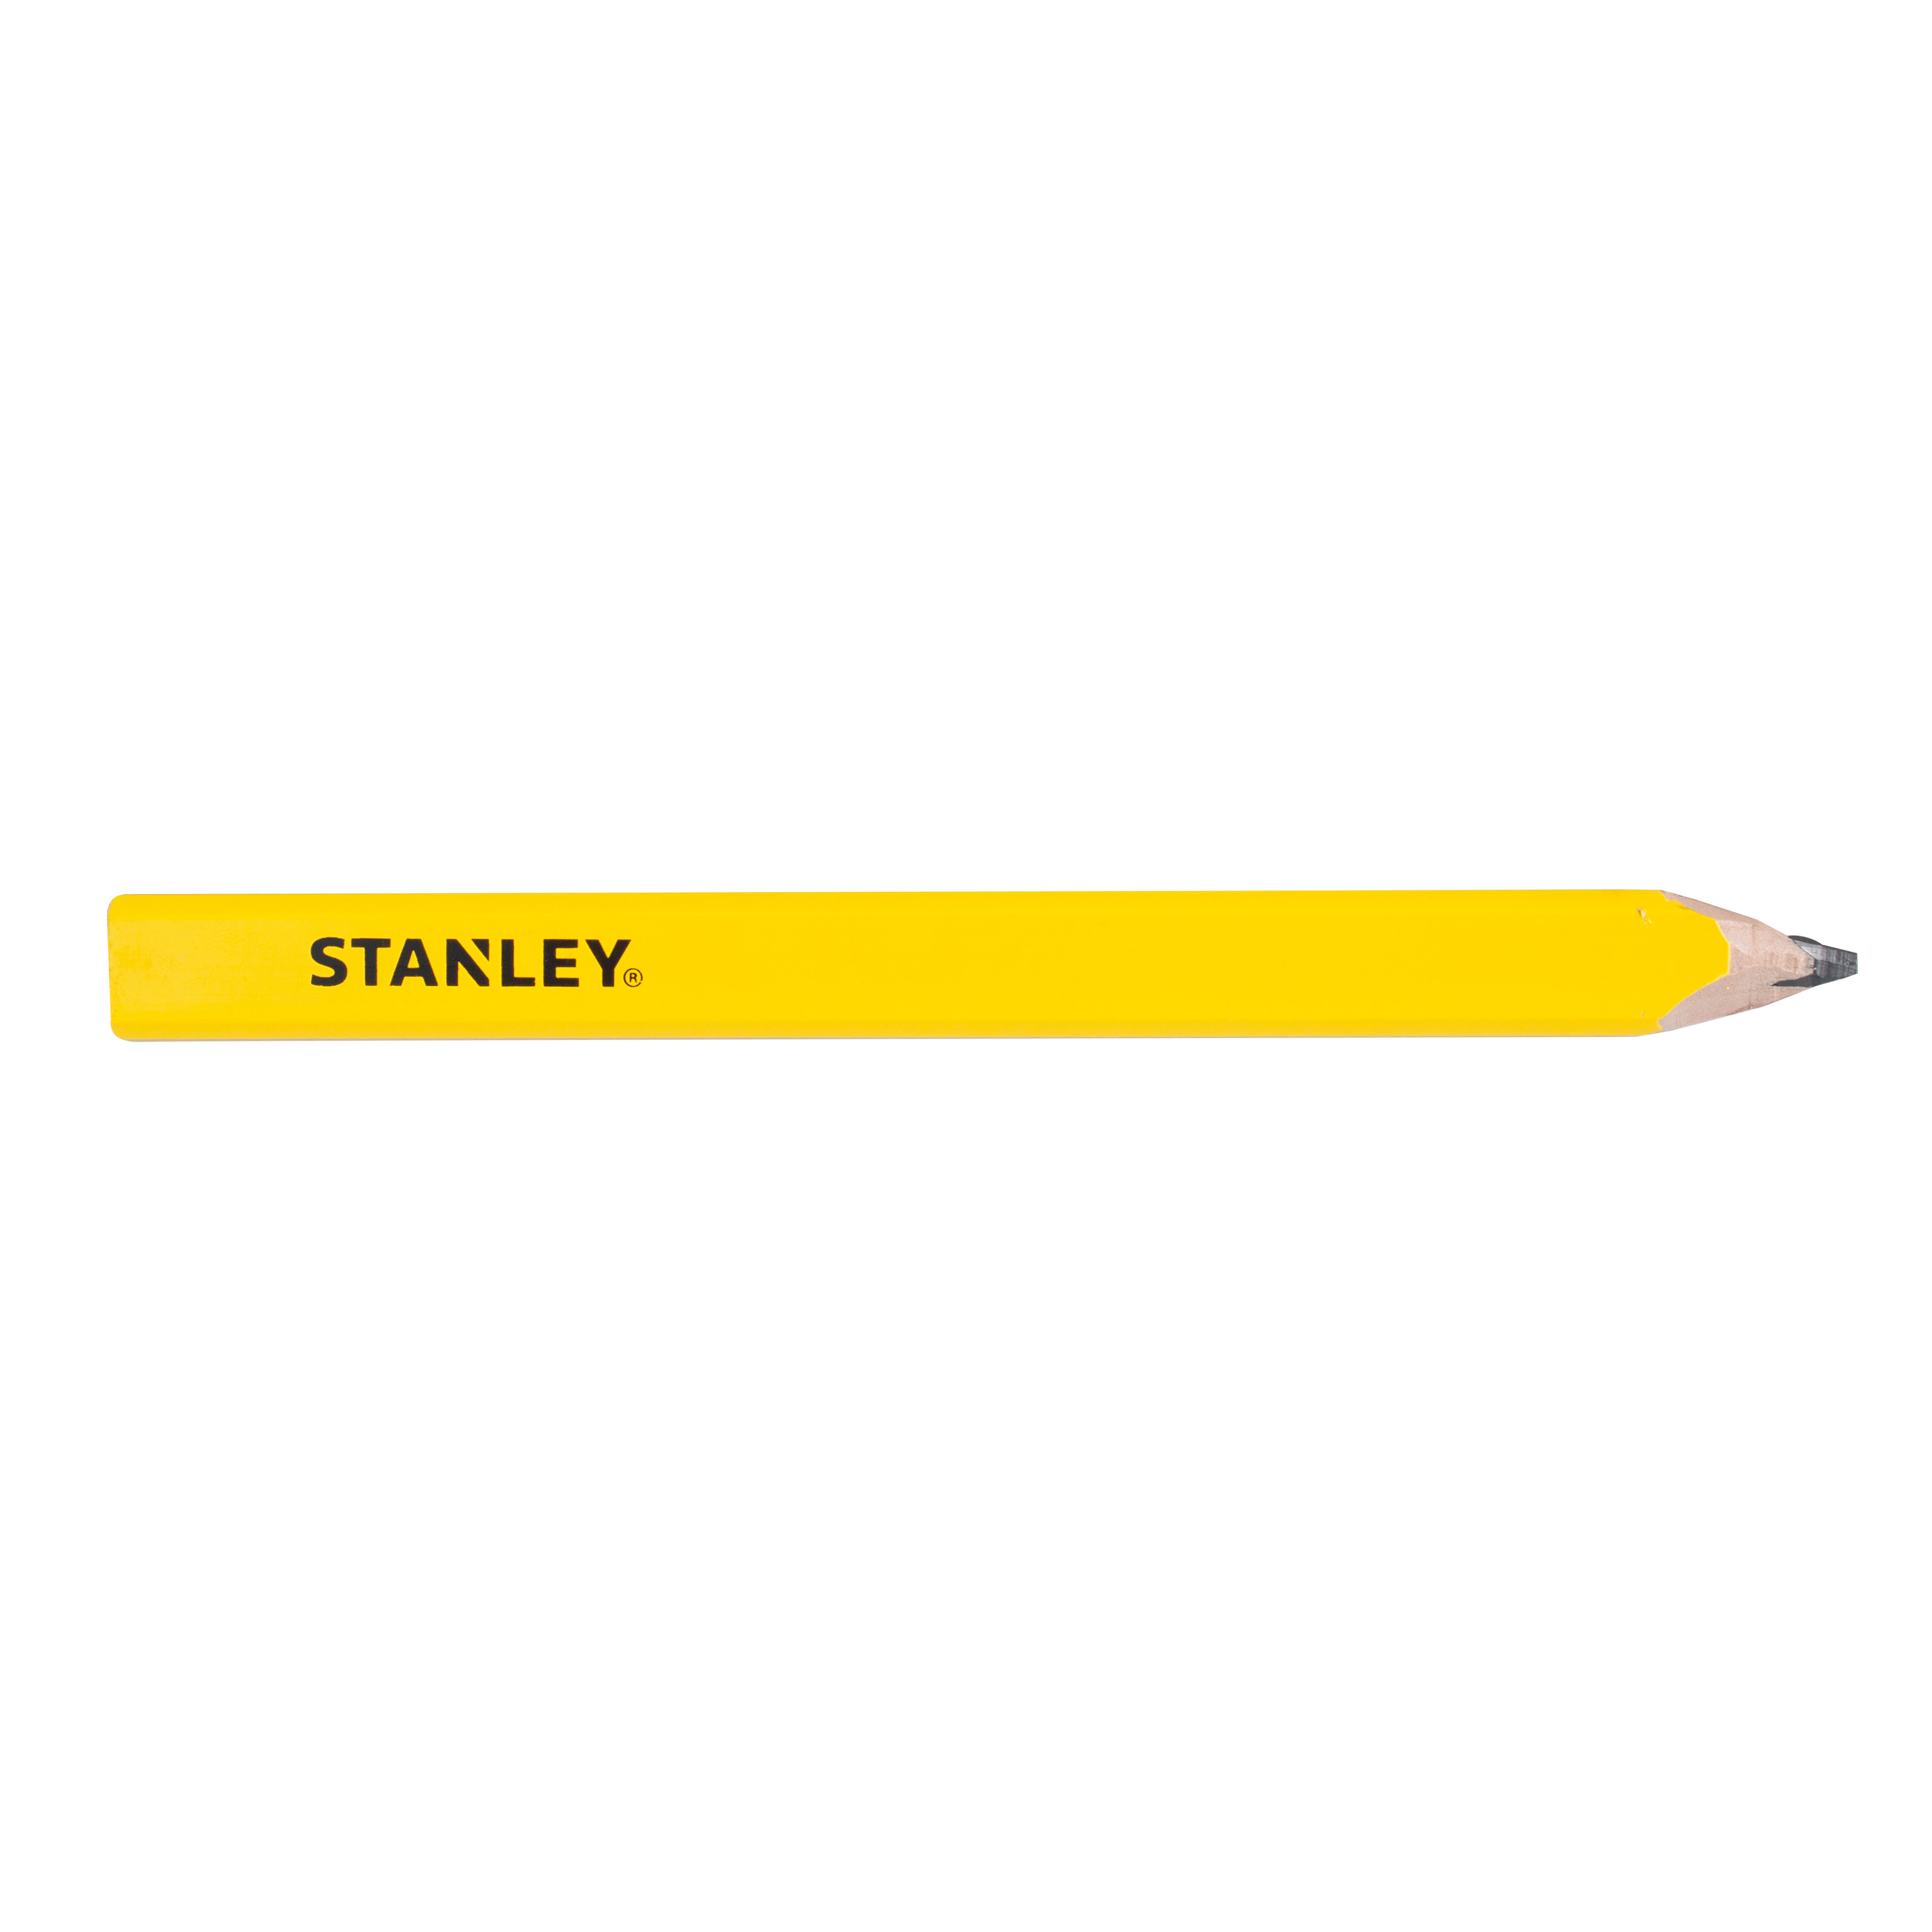 STANLEY 47-350 Carpenter Pencils 2-pack - image 3 of 3